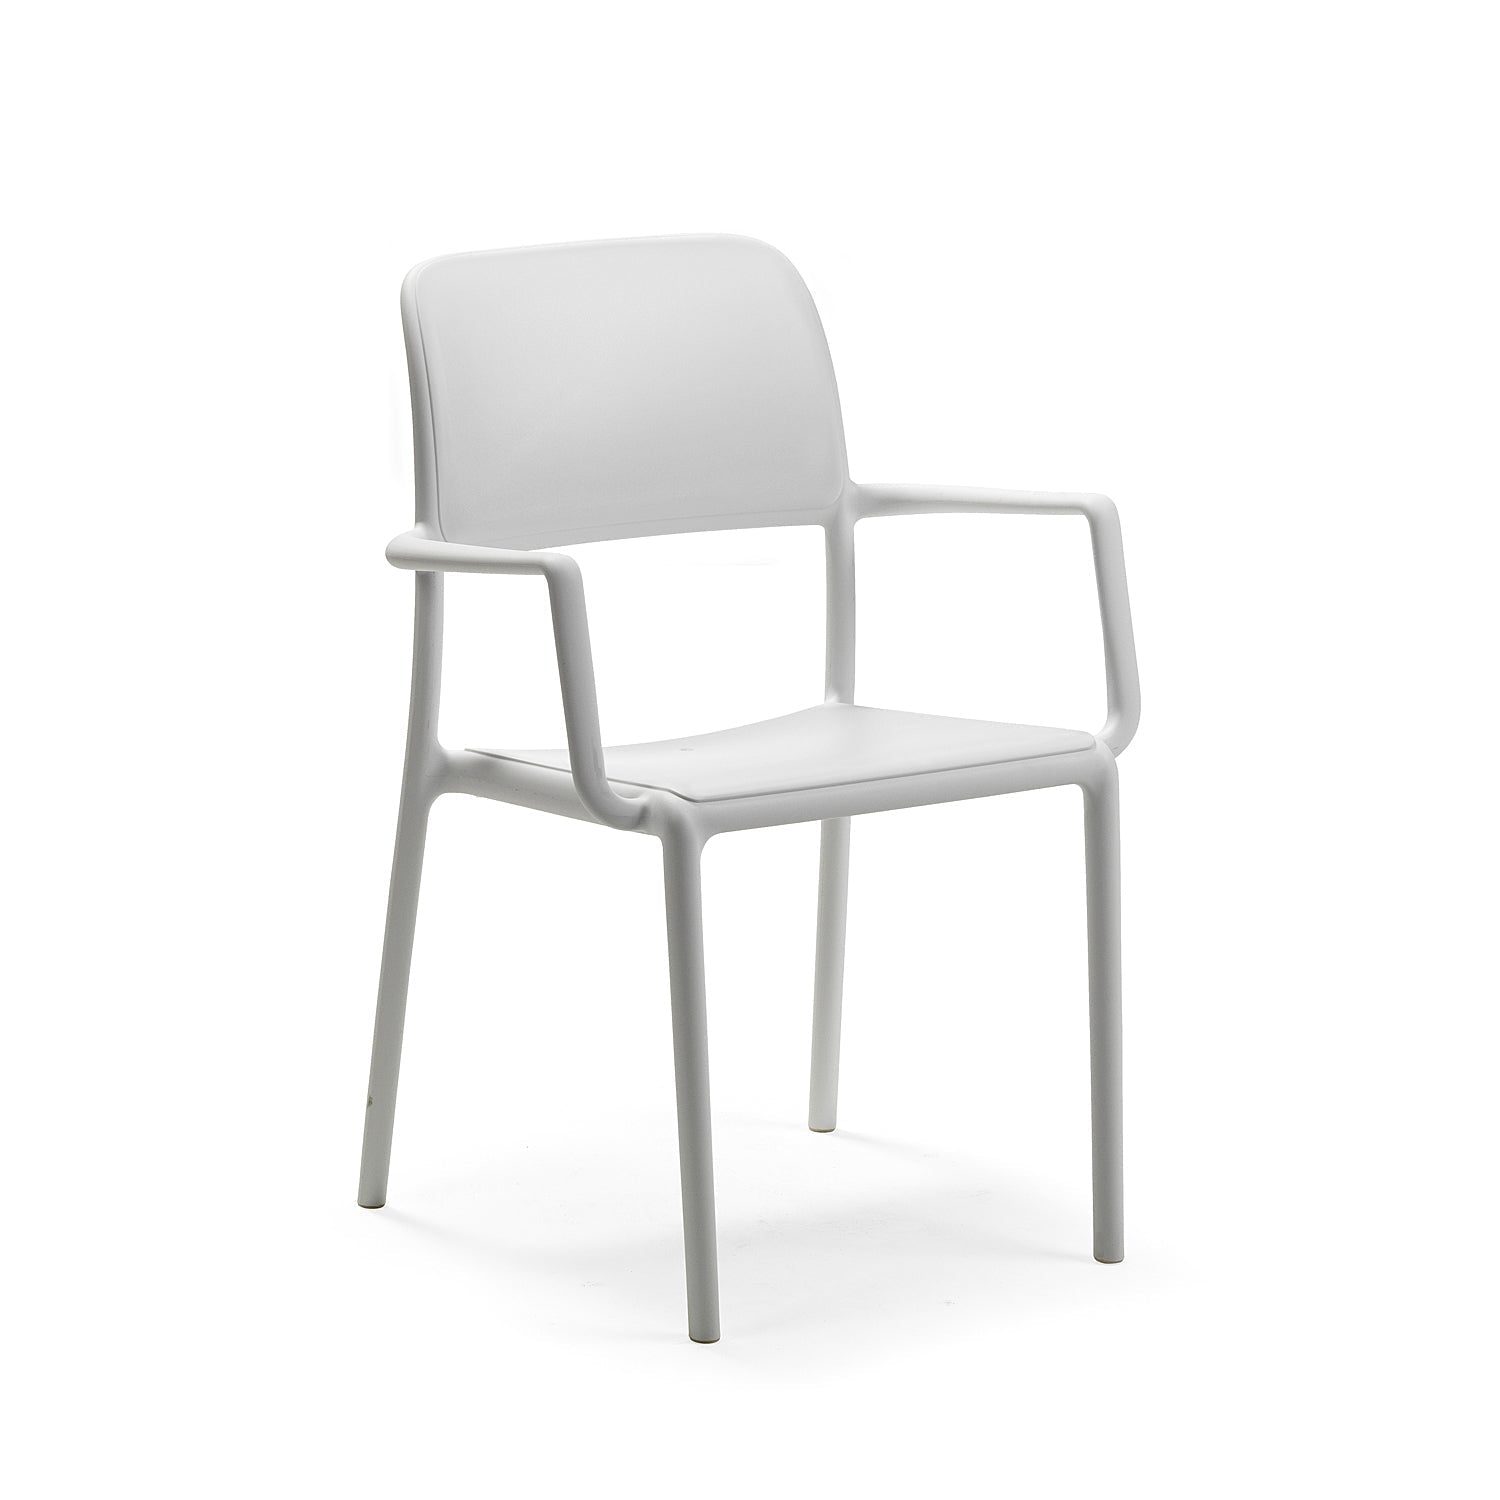 Riva Garden Chair By Nardi In White